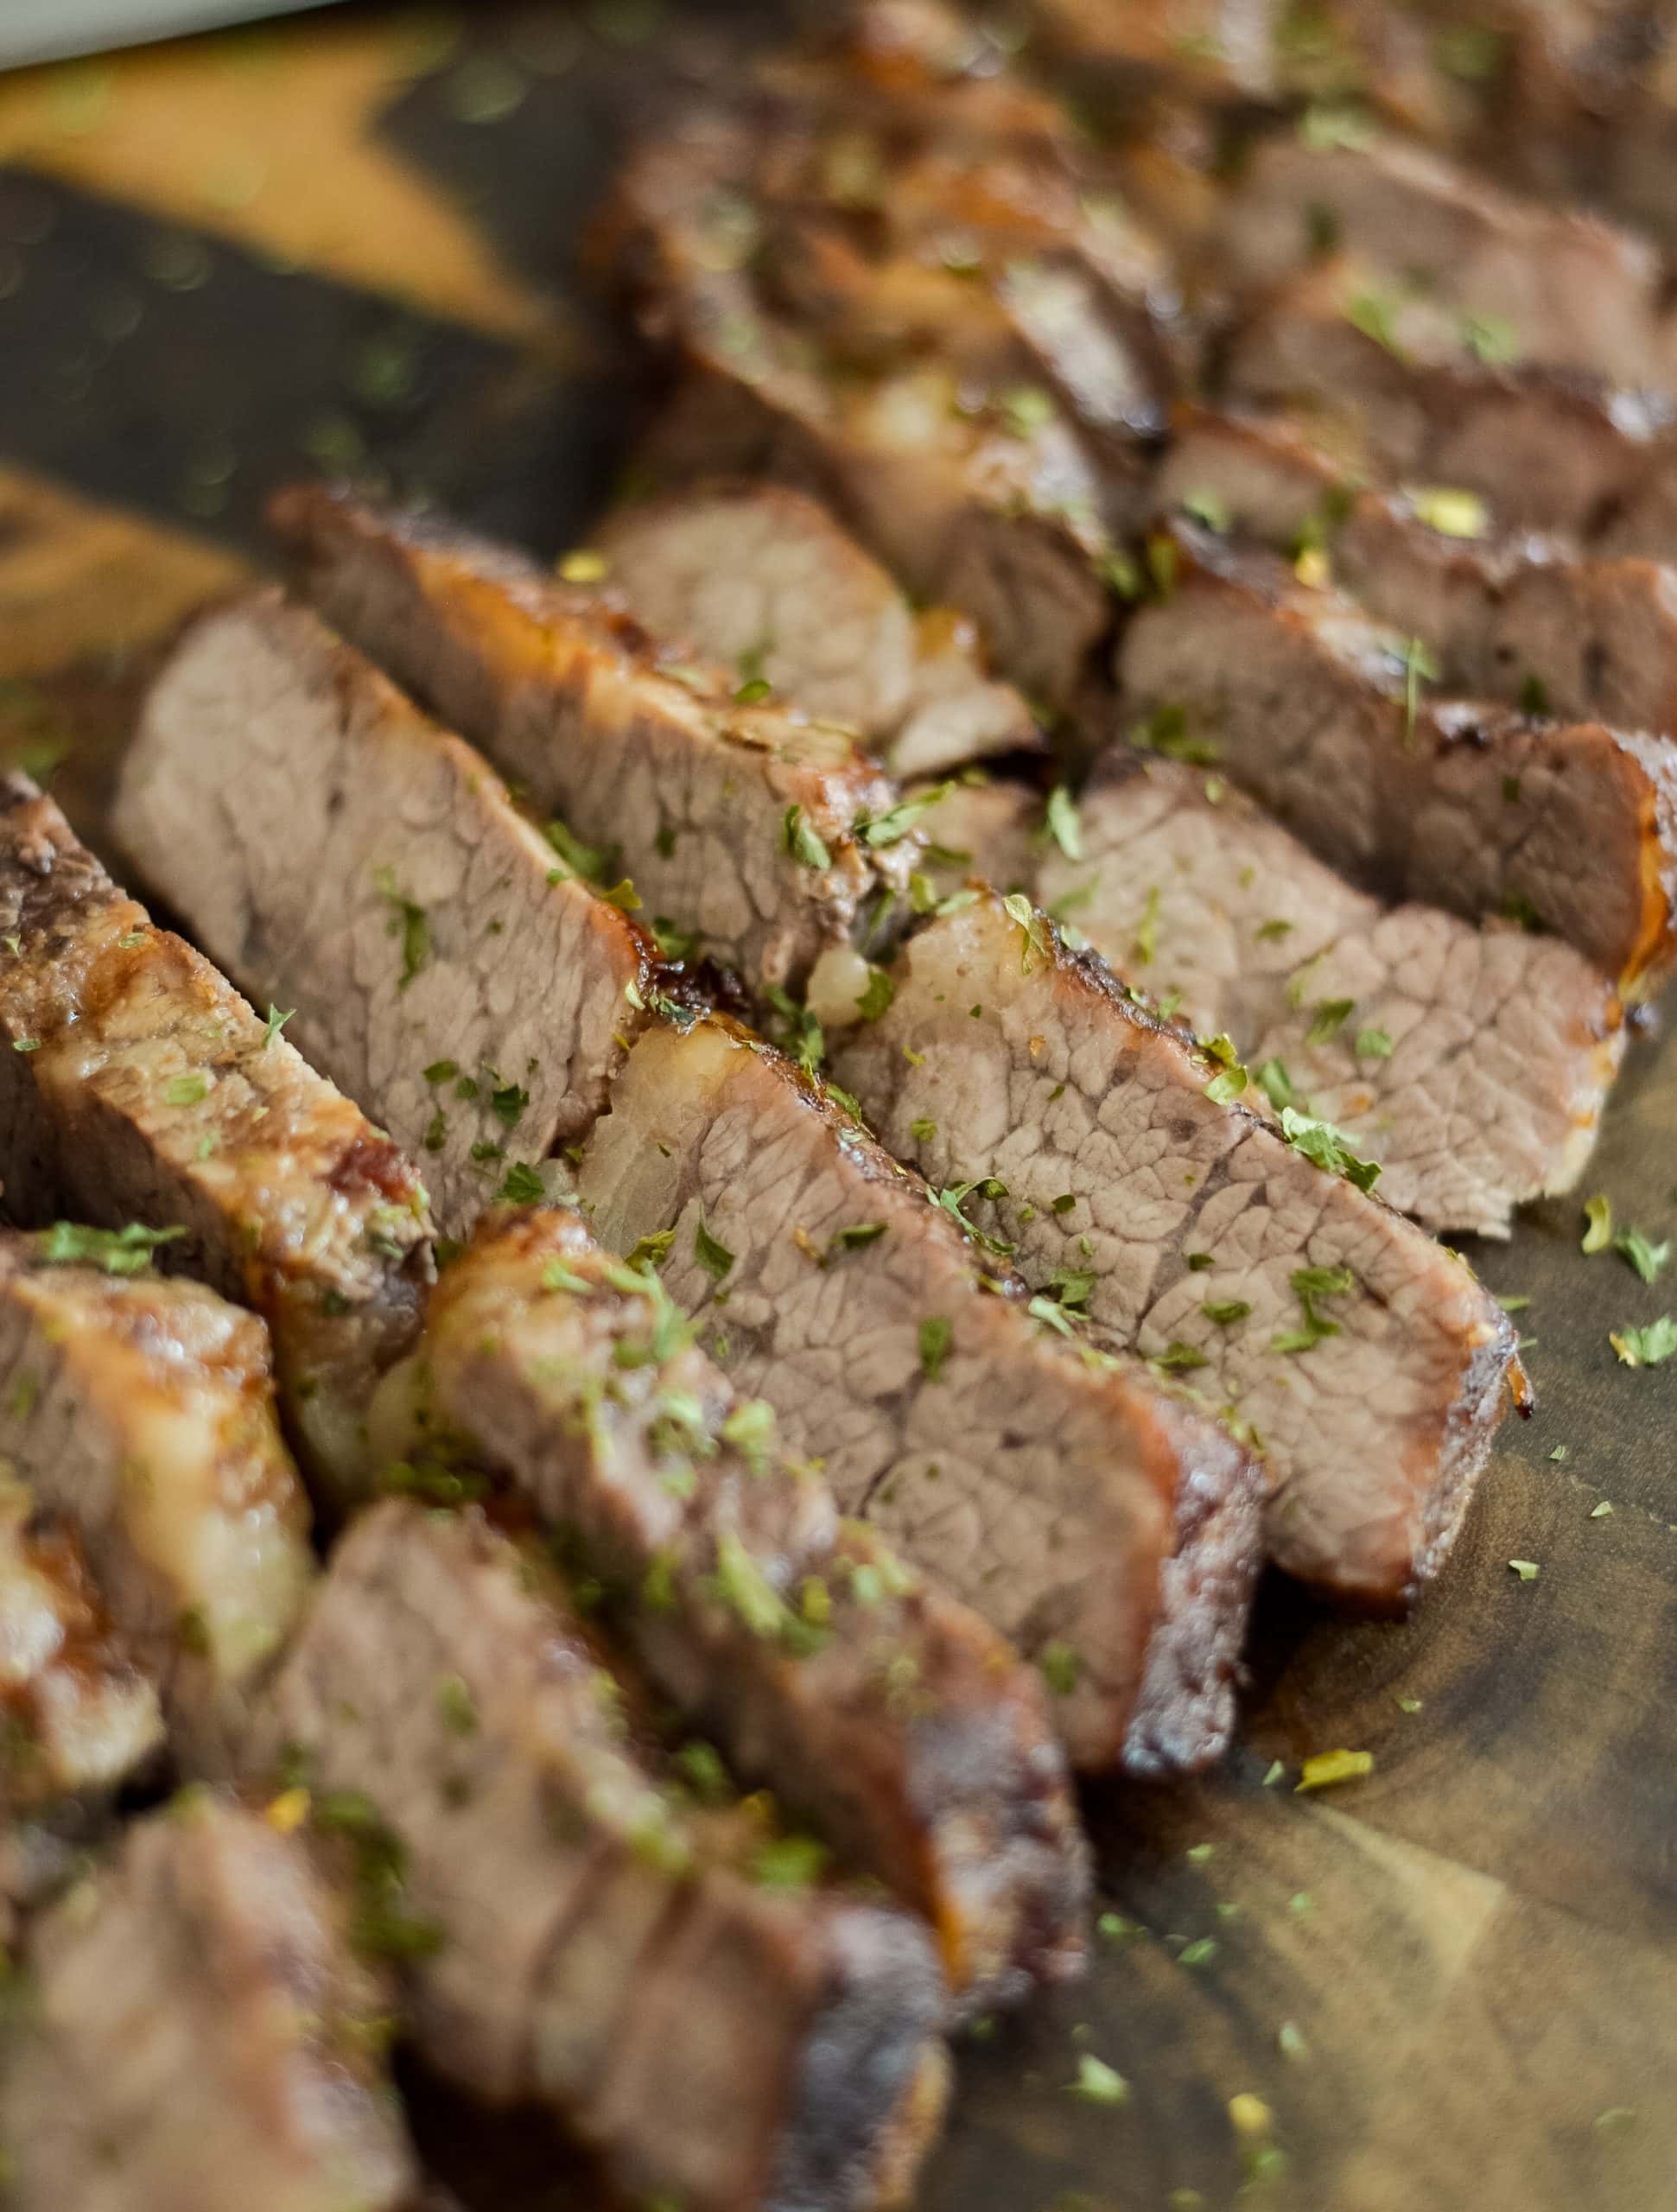 Easy Ninja Foodi Grill Steak Kabobs Recipe with Video • Bake Me